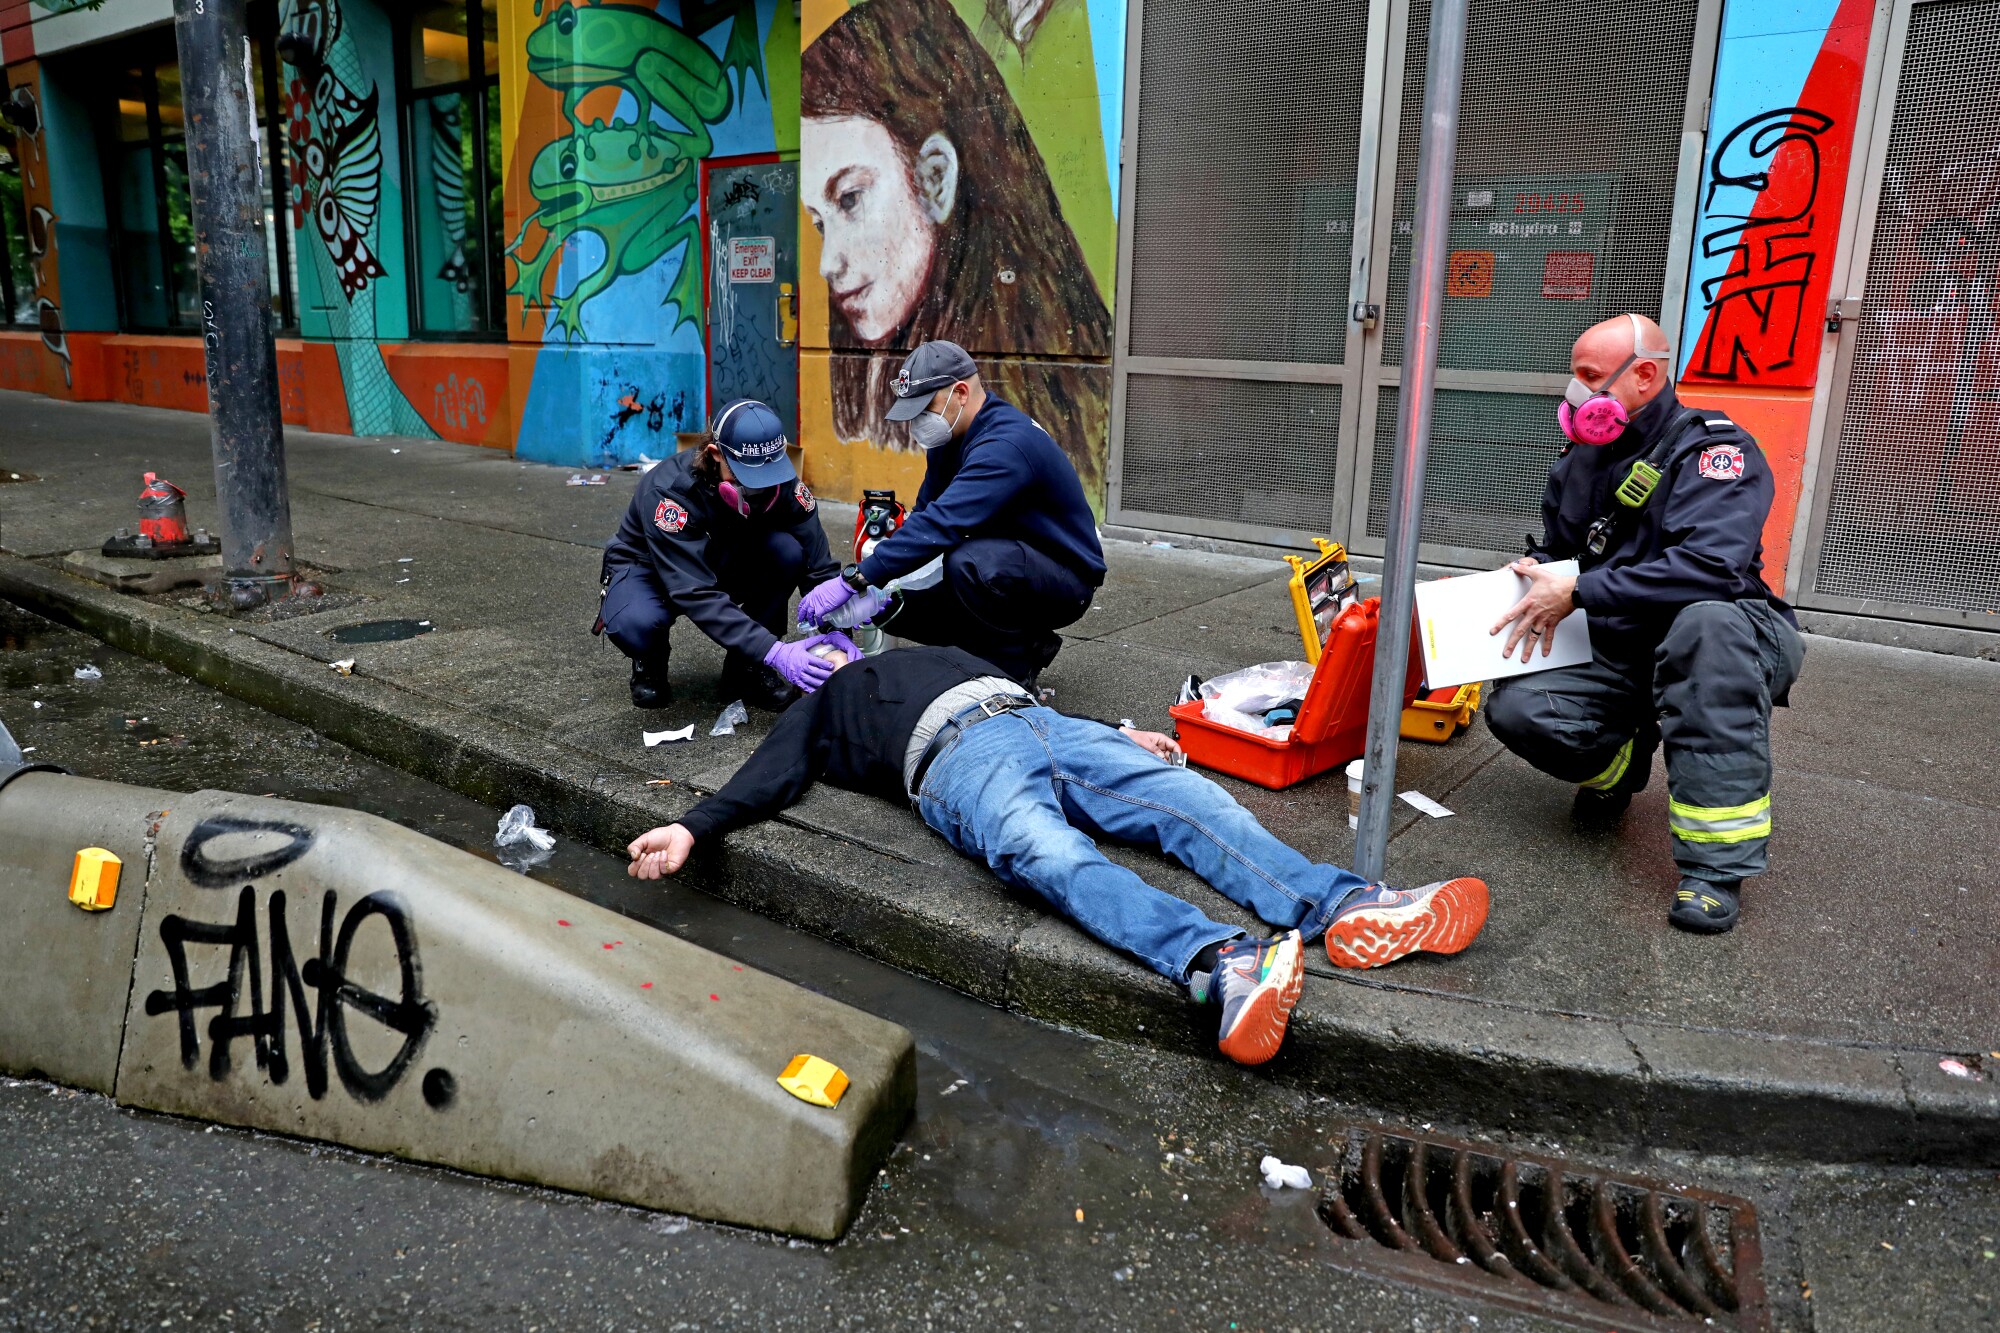 Medics attend to a man lying on a city sidewalk